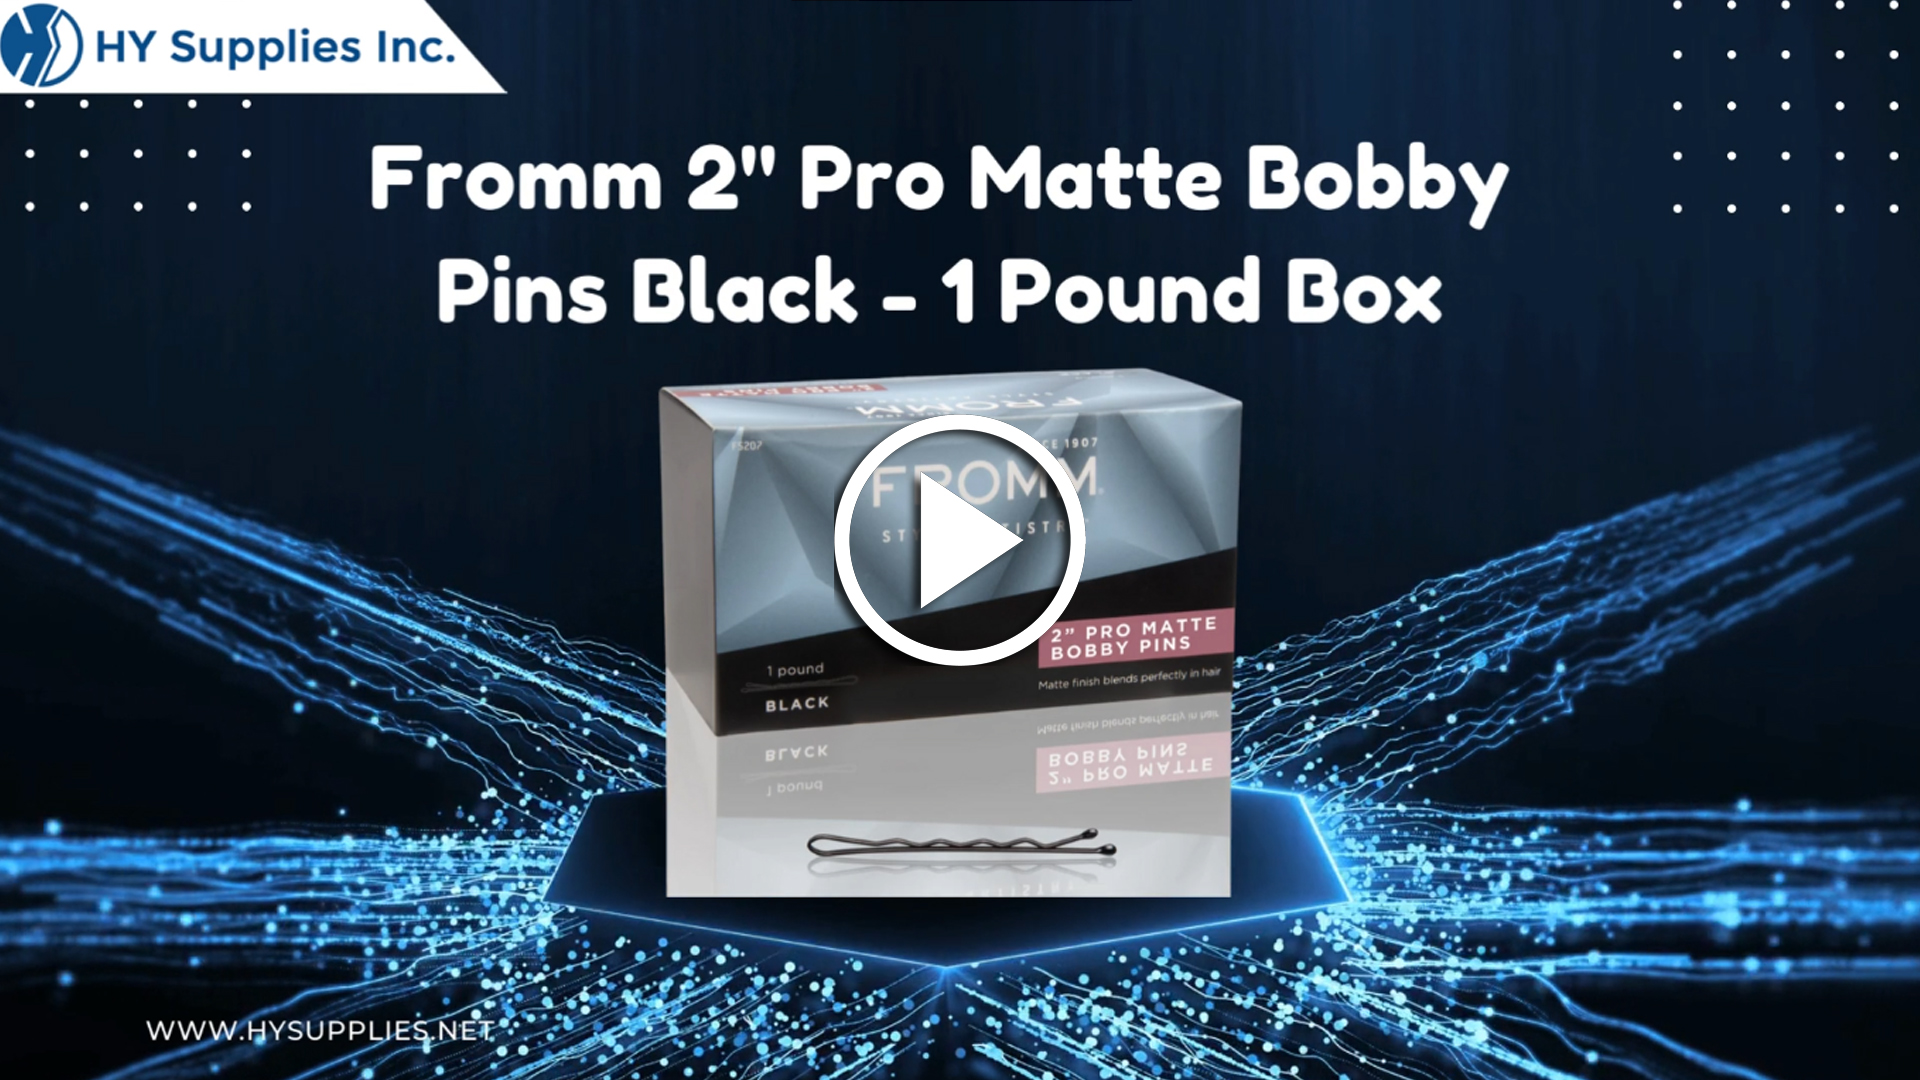 Fromm 2"" Pro Matte Bobby Pins Black - 1 Pound Box